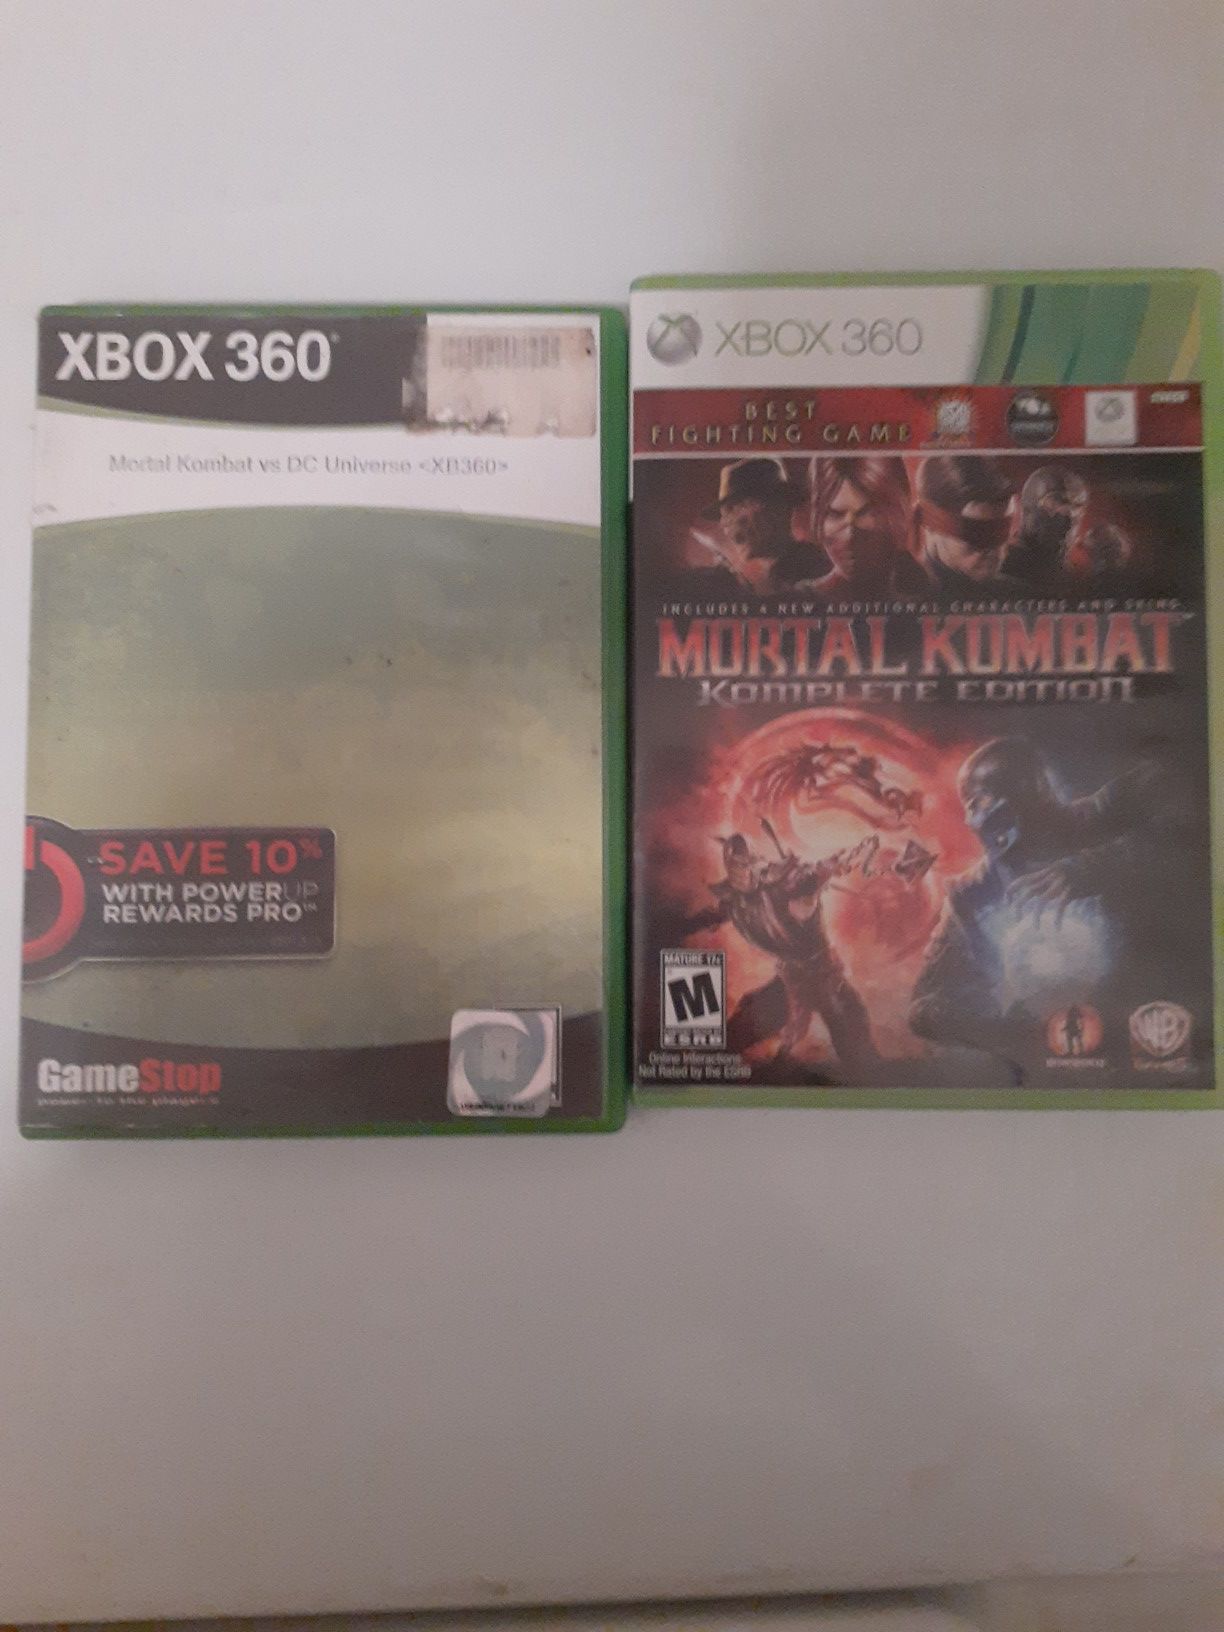 Mortal Combat vs DC universe and Mortal combat complete edition for xbox 360